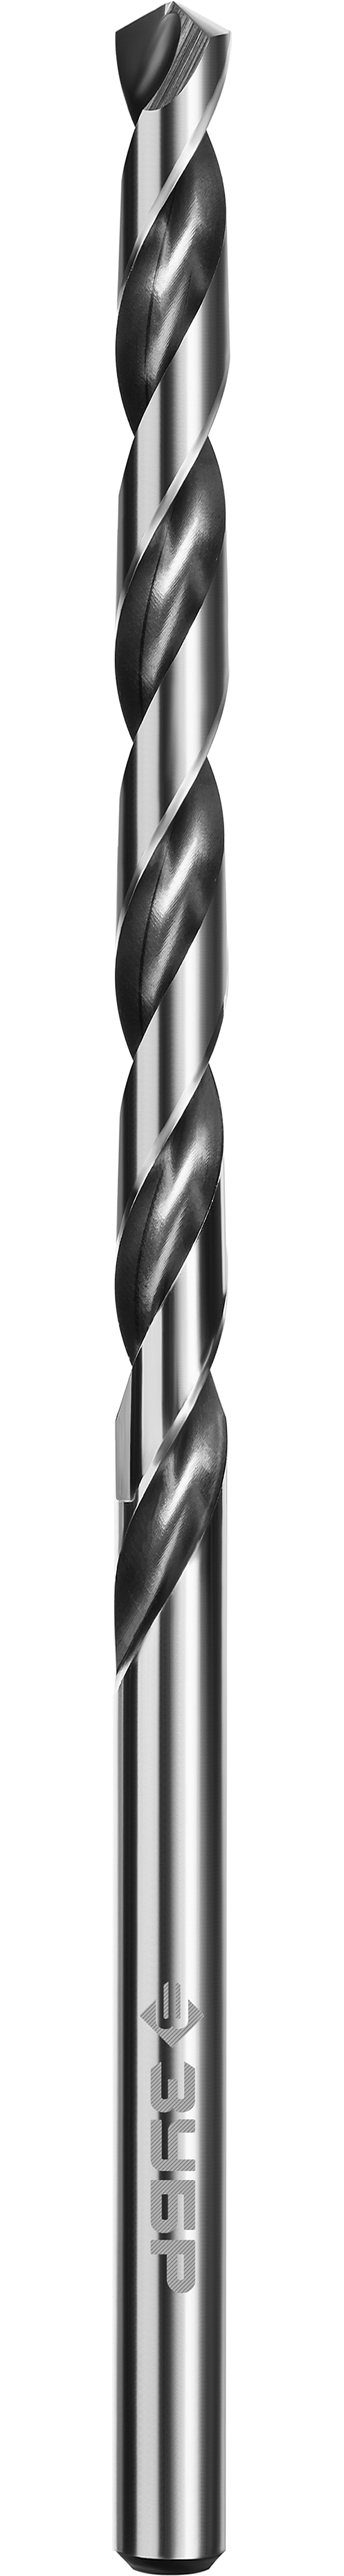 Сверло ⌀5.5 мм x 13.9 см/9.1 см, сталь Р6М5, по металлу, ЗУБР ПРОФ-А, класс A, 1 шт. (29624-5.5)